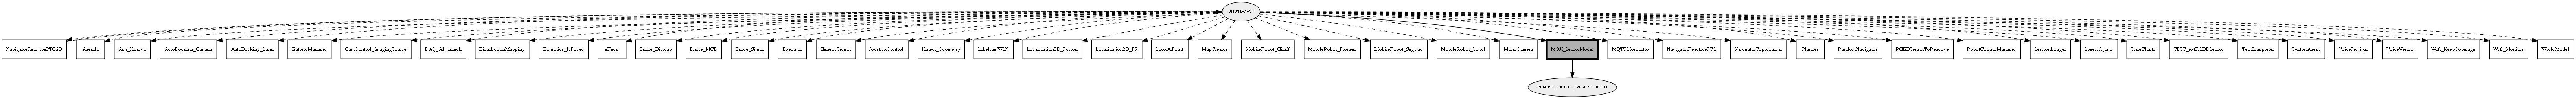 MOX_SensorModel